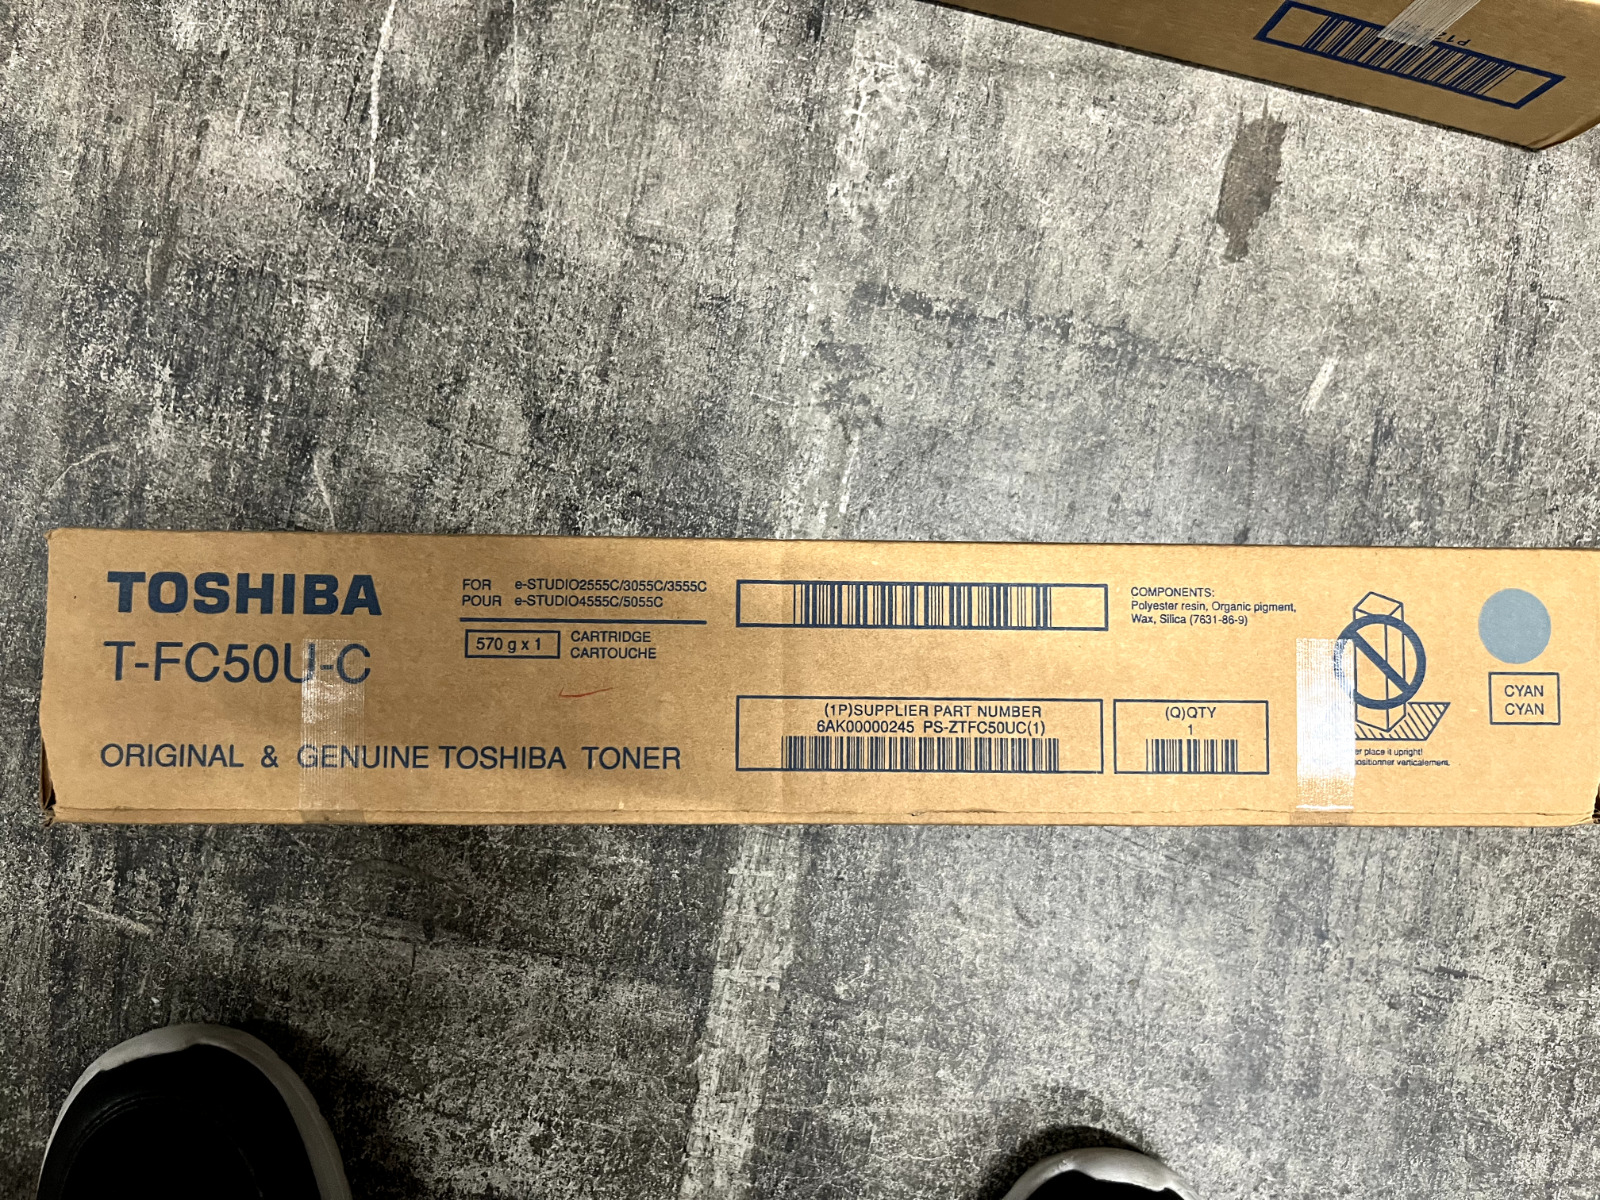 Genuine Toshiba TFC50UC e-Studio 2555c Cyan Toner Cartridge